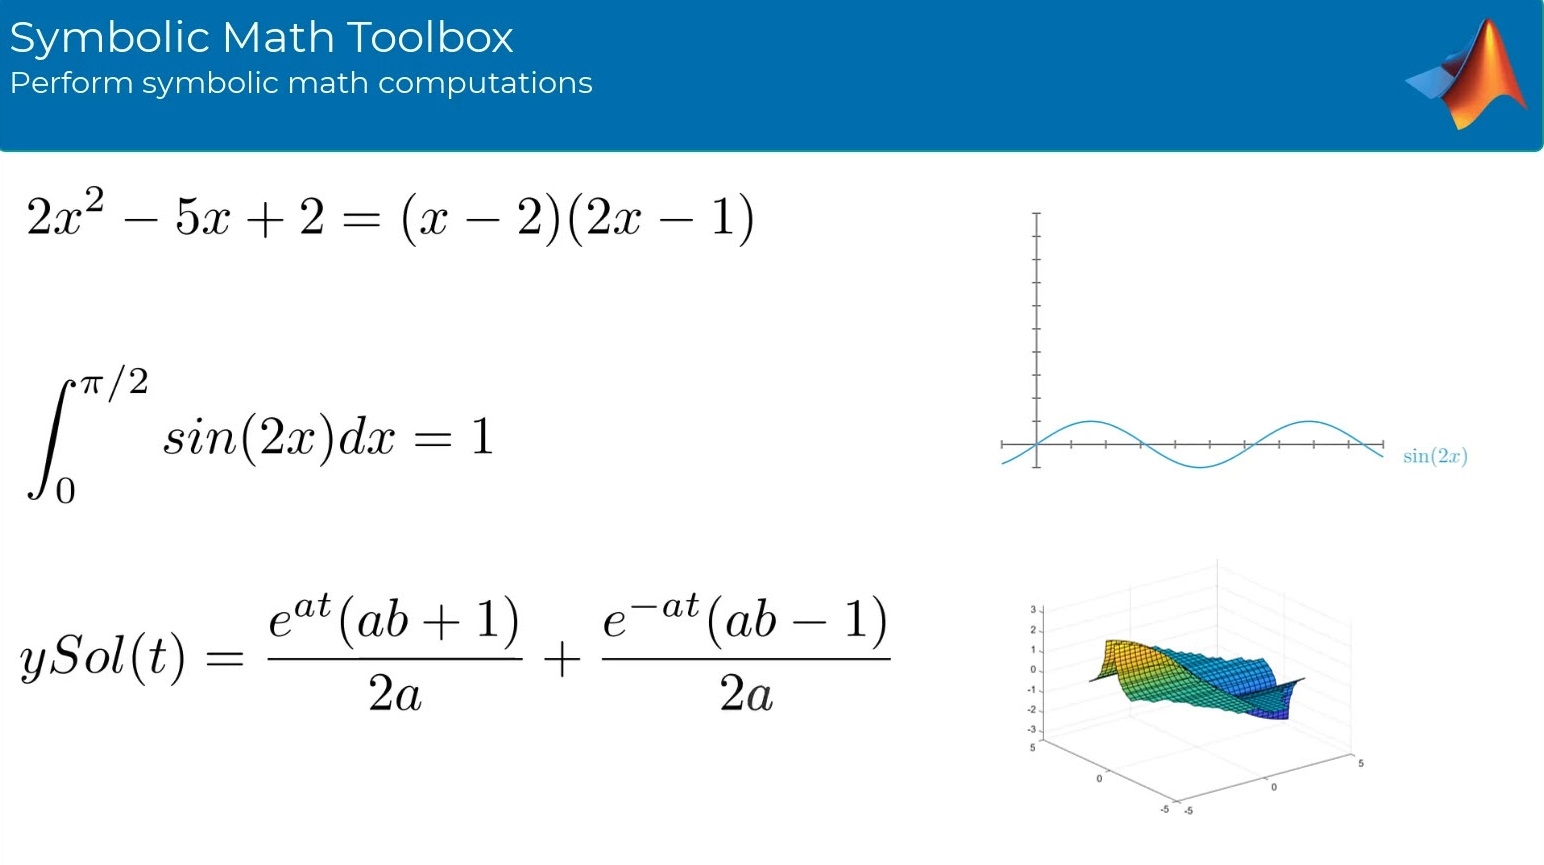 Perform symbolic math computations using Symbolic Math Toolbox™. The toolbox provides functions for solving, plotting, and manipulating symbolic math equations.